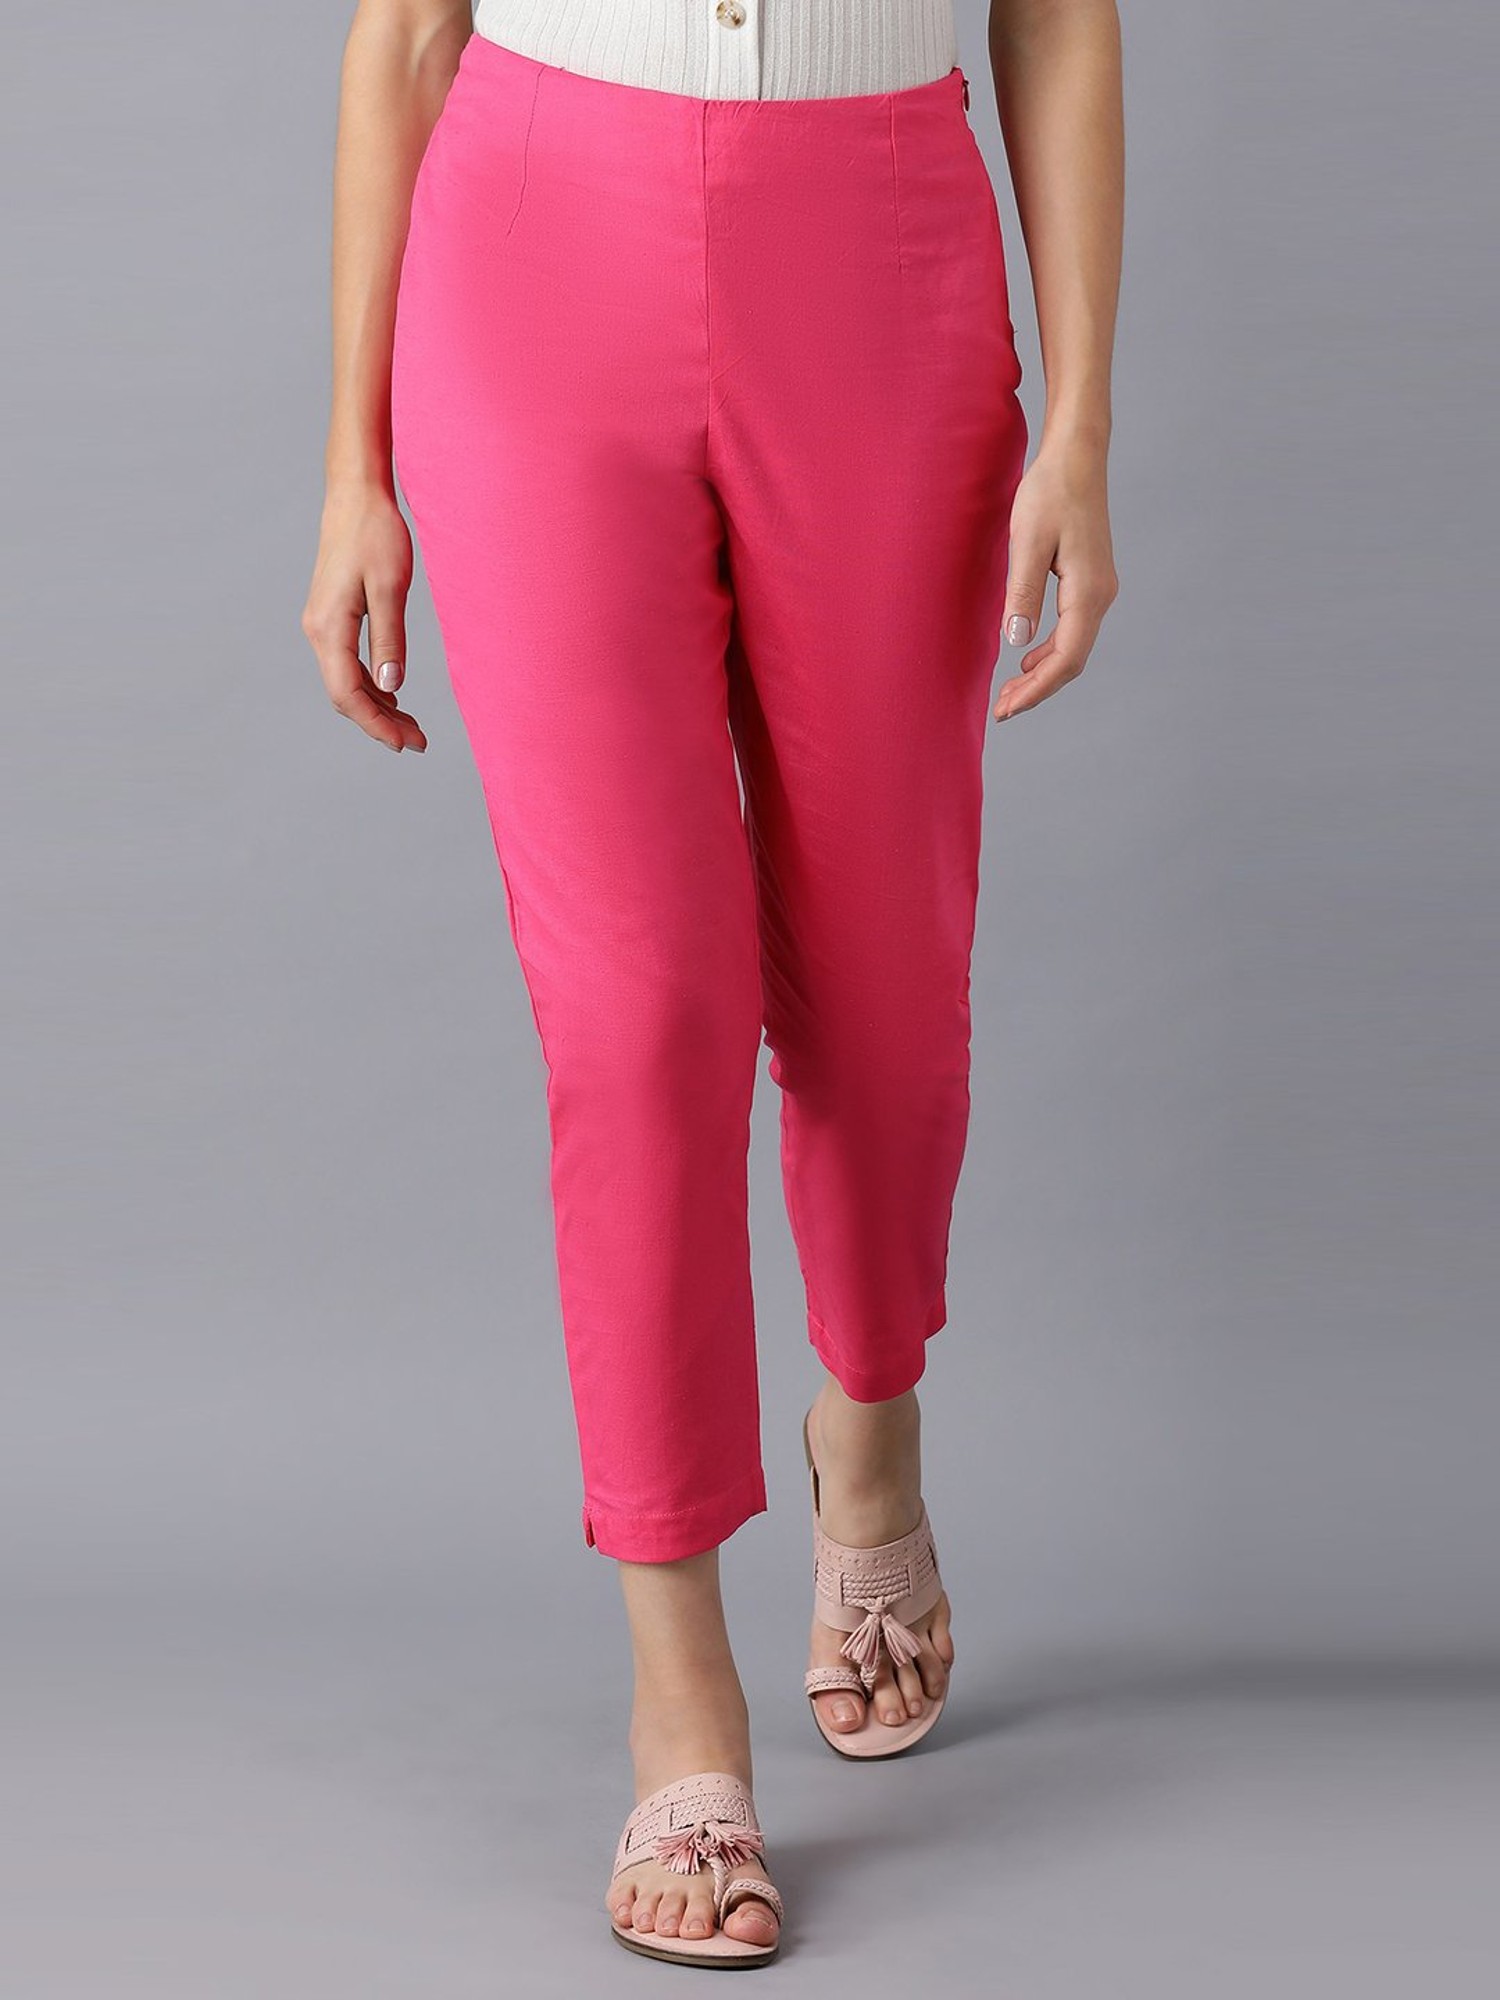 Buy W Pink Cotton Pants for Women Online @ Tata CLiQ